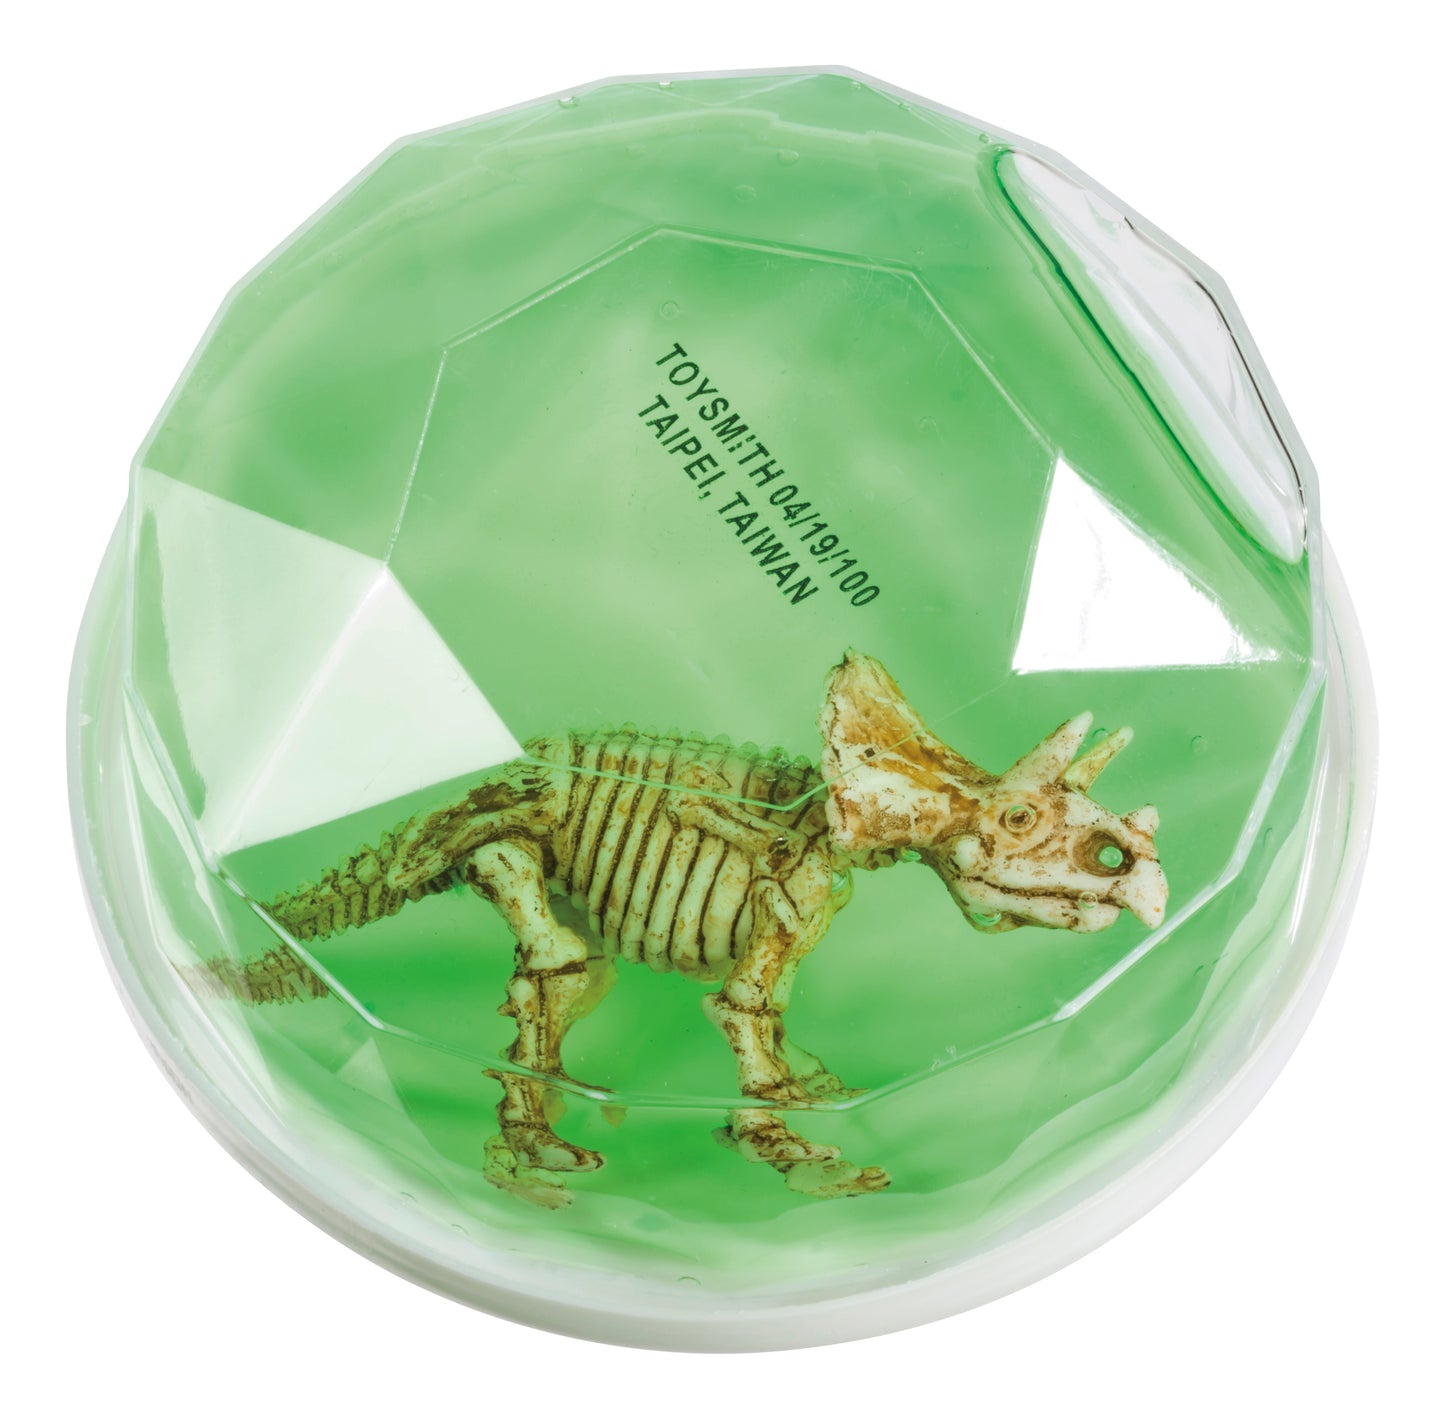 Green Dinosaur Putty with a dinosaur figure